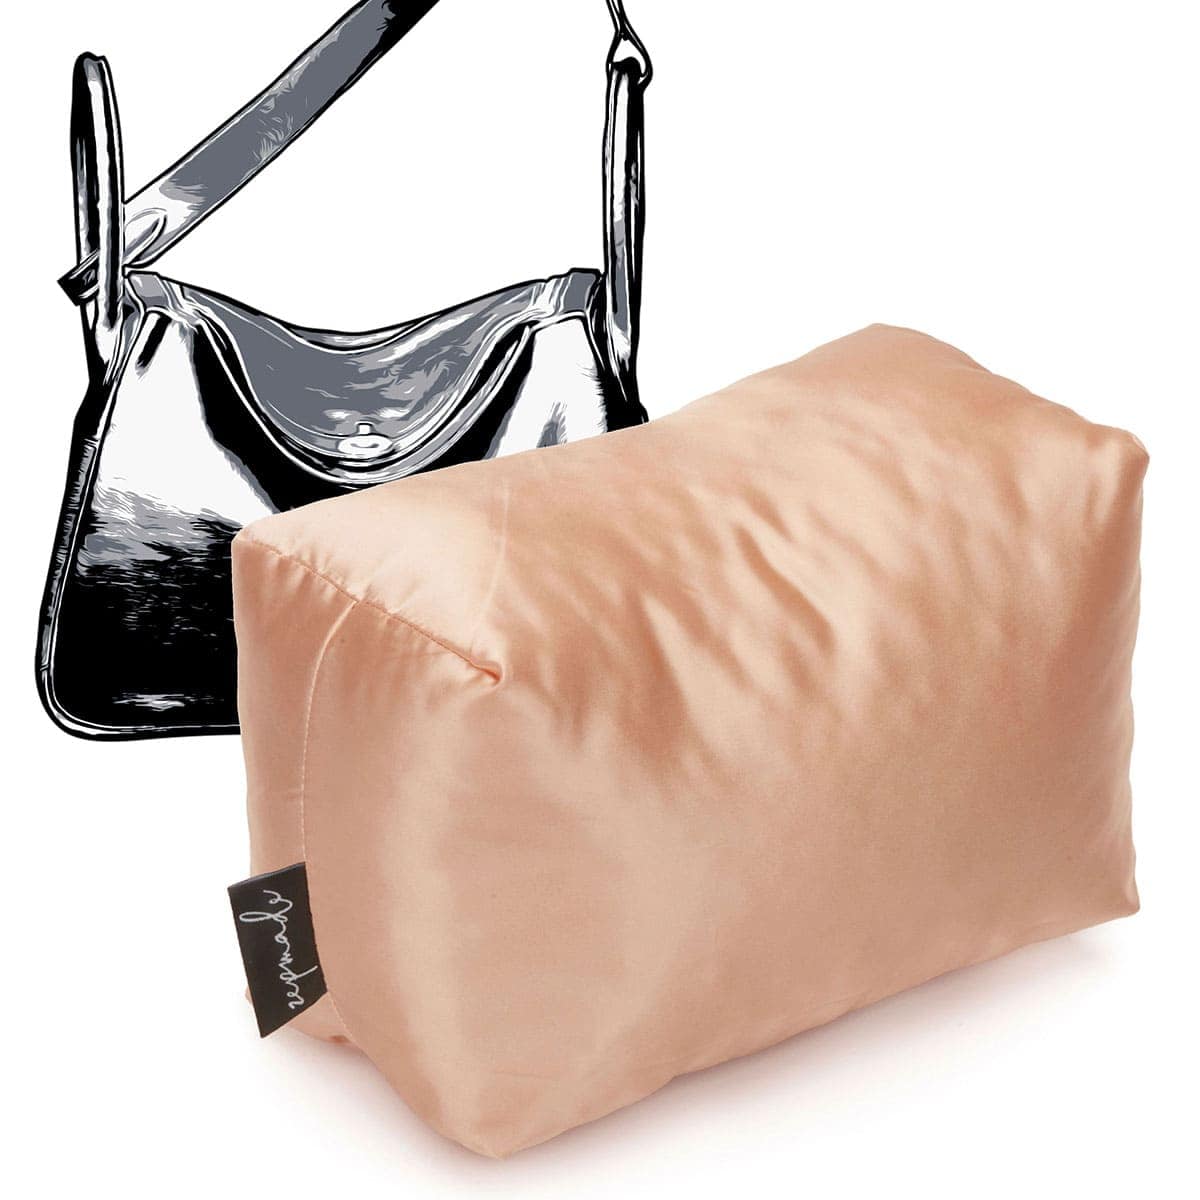 Purse Pillow for Hermes Lindy Bag Models, Bag Shaper Pillow, Purse